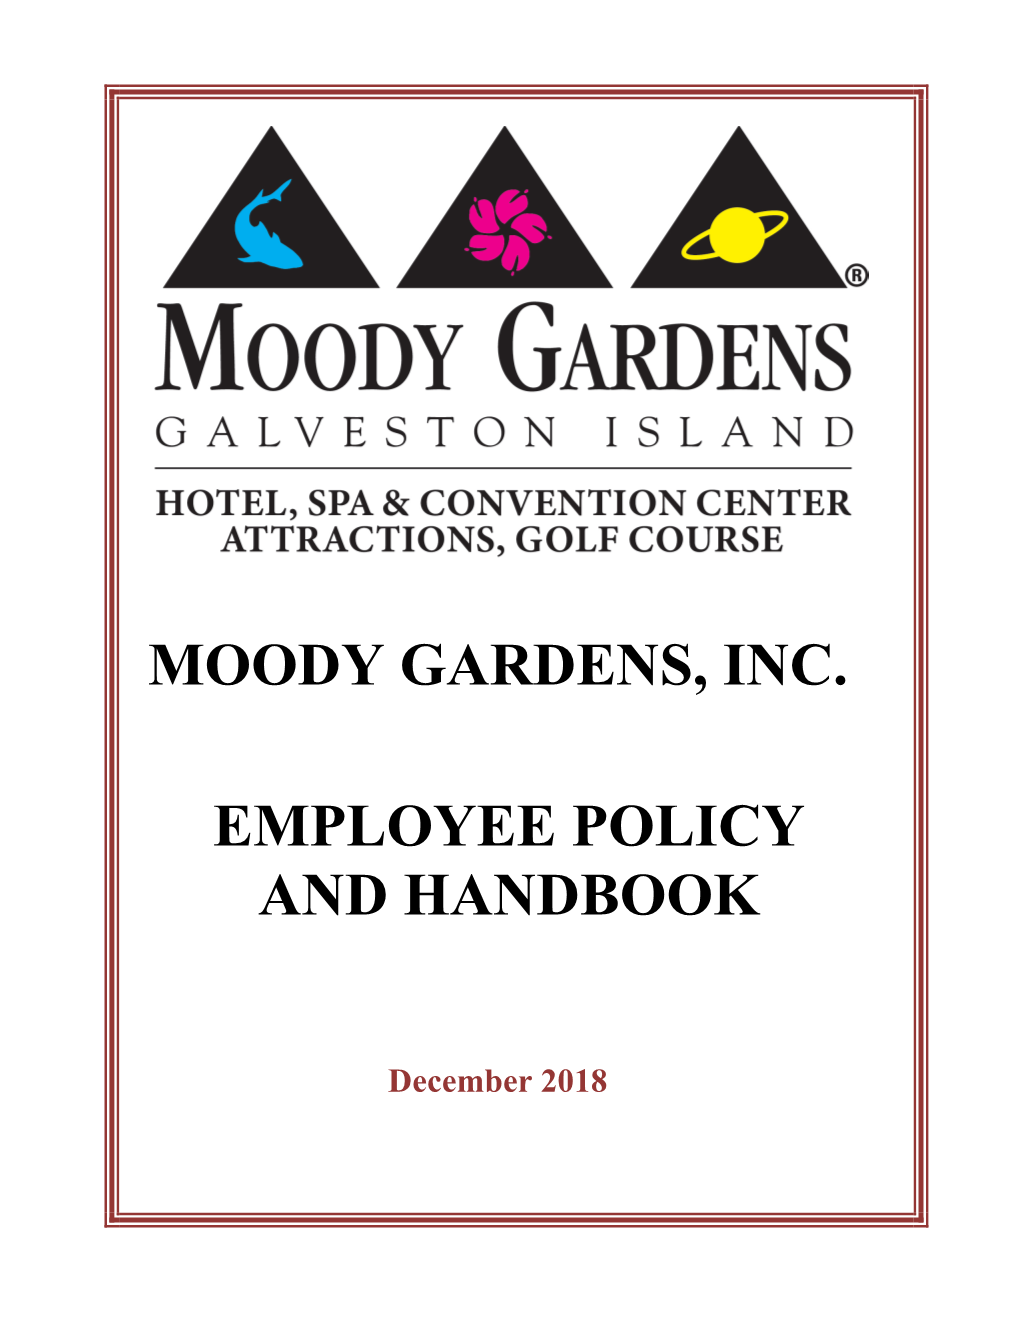 Moody Gardens, Inc. Employee Policy and Handbook